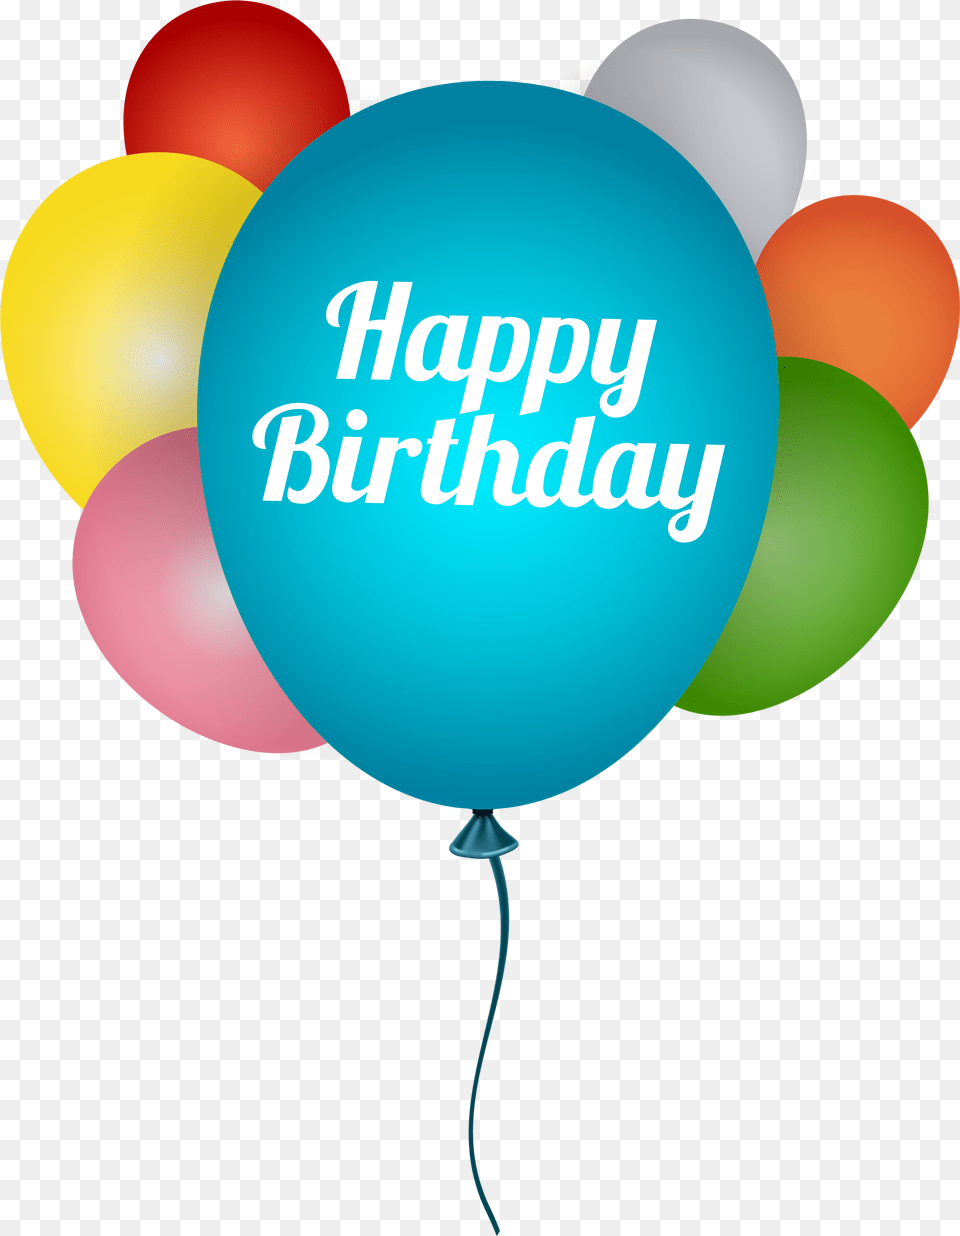 Birthday Cake Wish Greeting Card New Happy Birthday Balloon Transparent Background Png